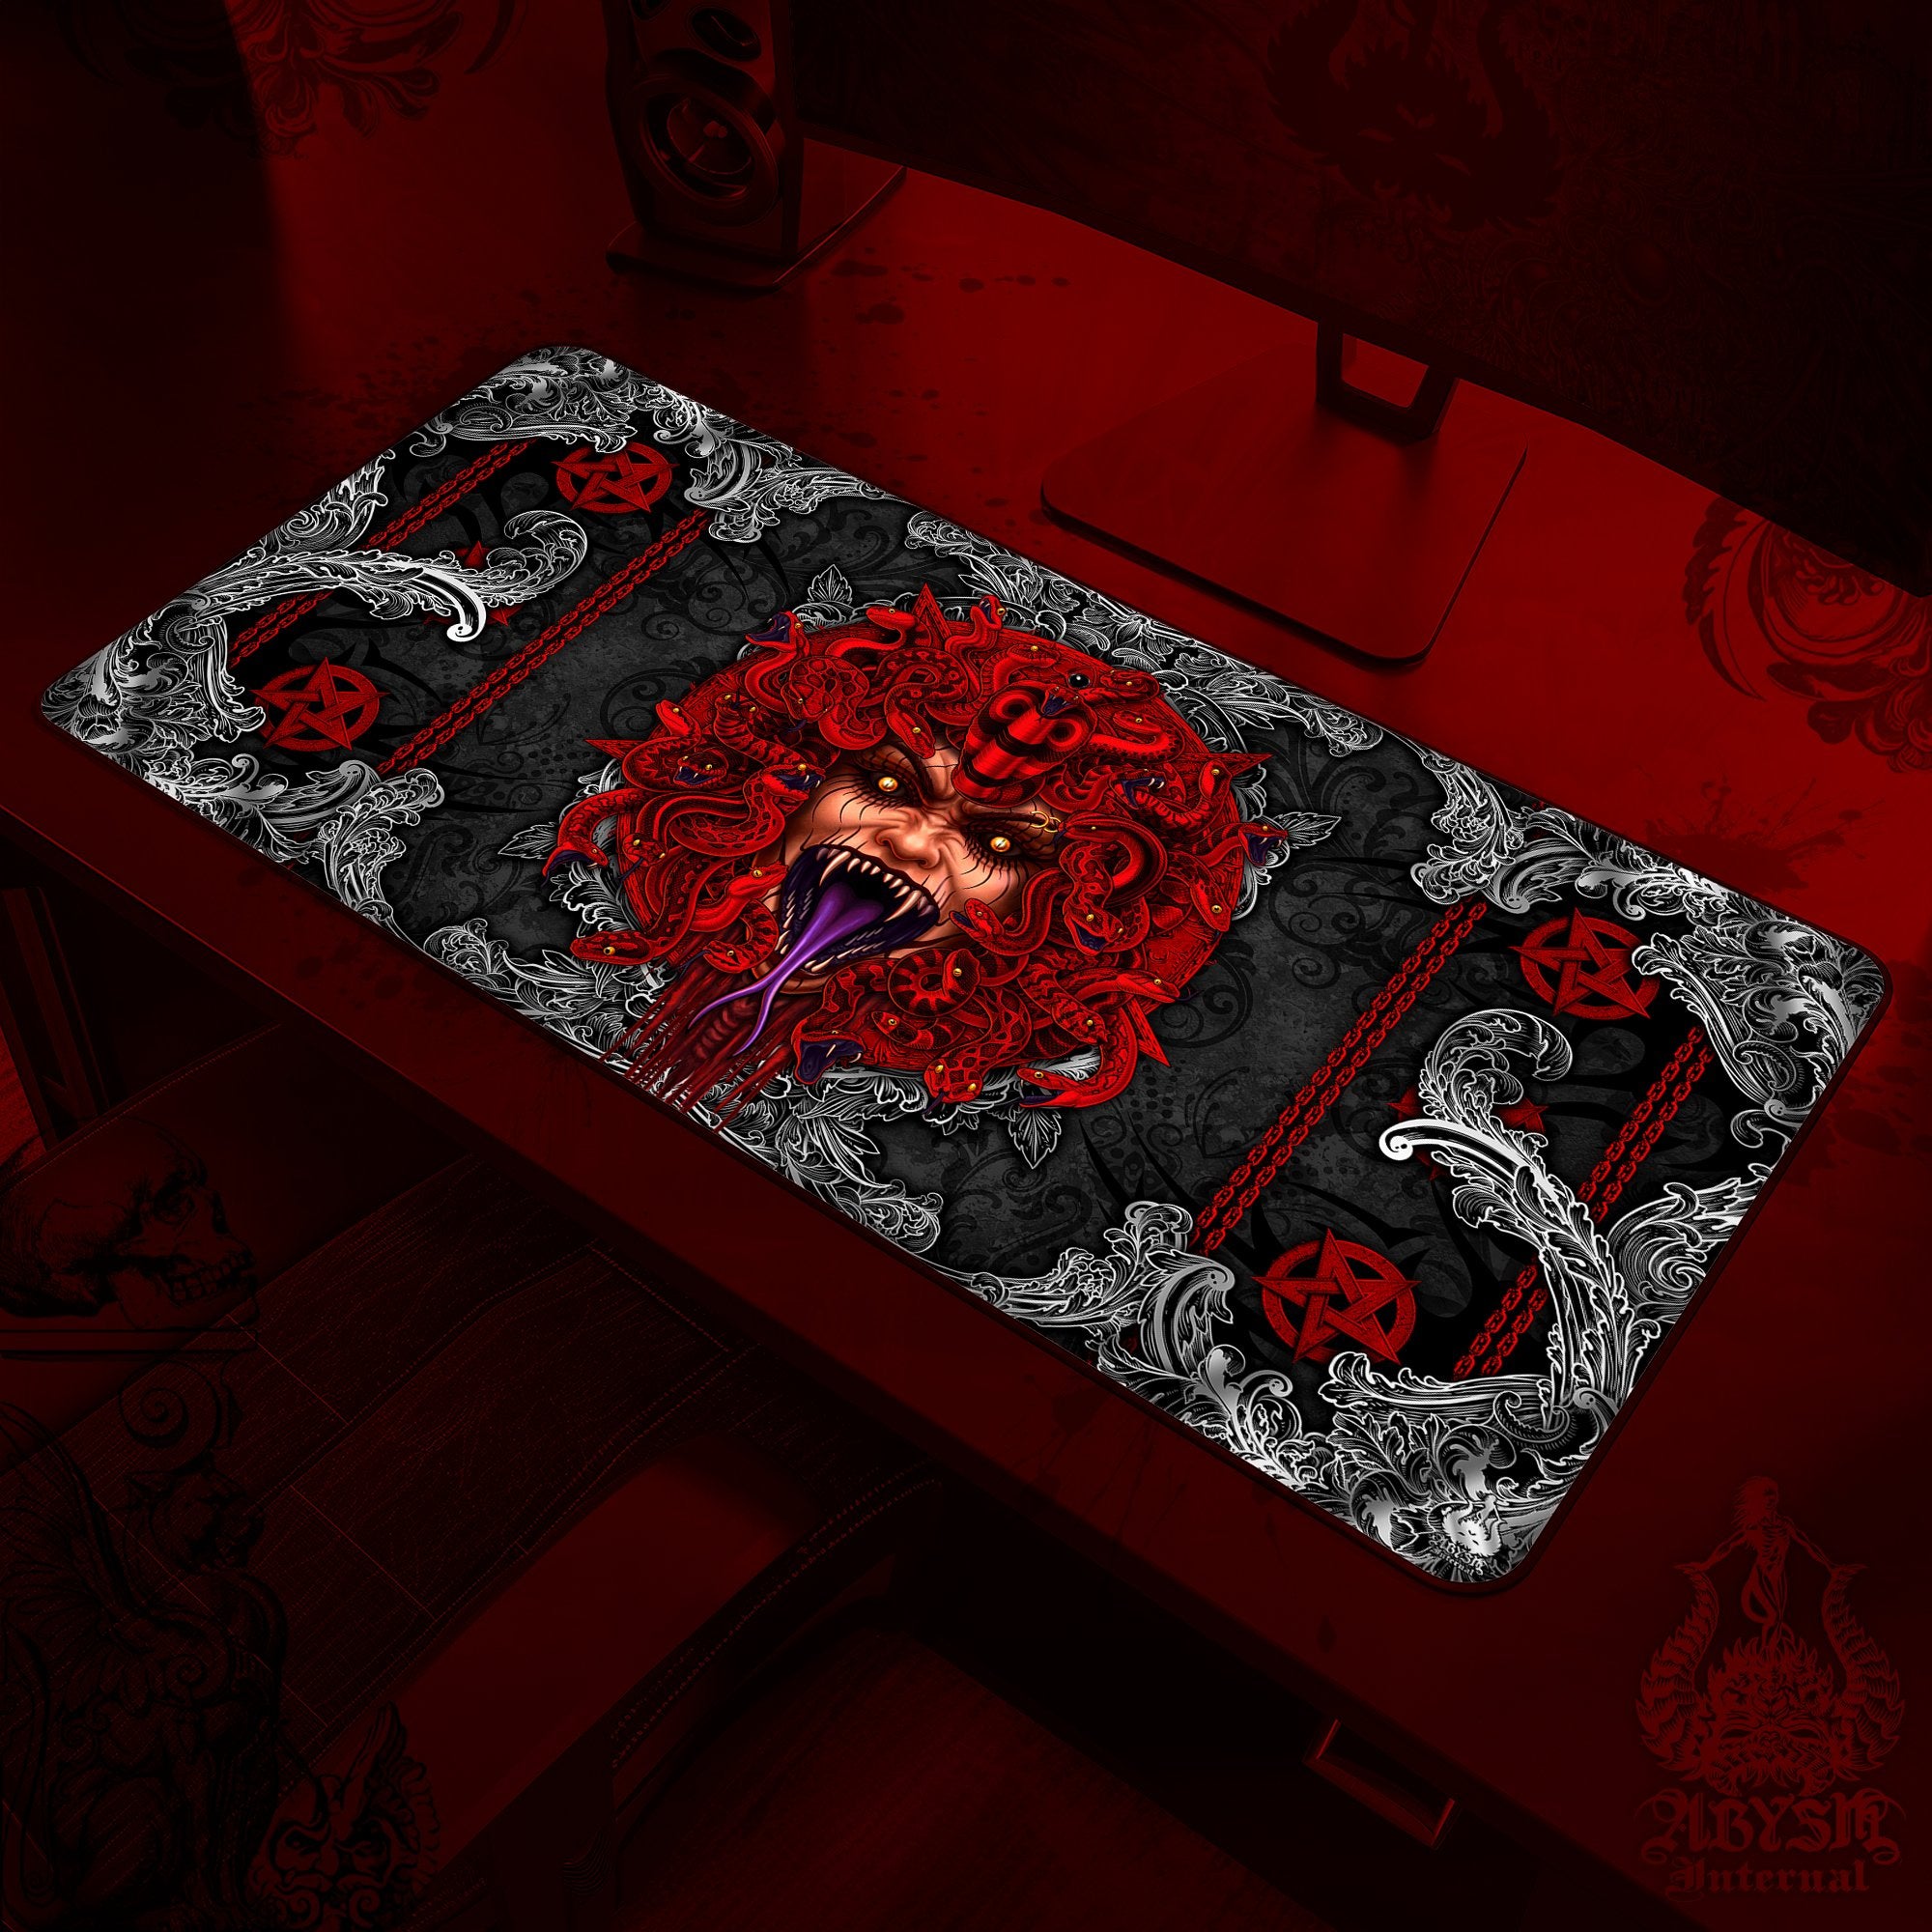 Demon Desk Mat, Satanic Gaming Mouse Pad, Gamer Table Protector Cover with Red Pentagram, Devil Workpad, Dark Fantasy Art Print - Medusa, 3 Options - Abysm Internal